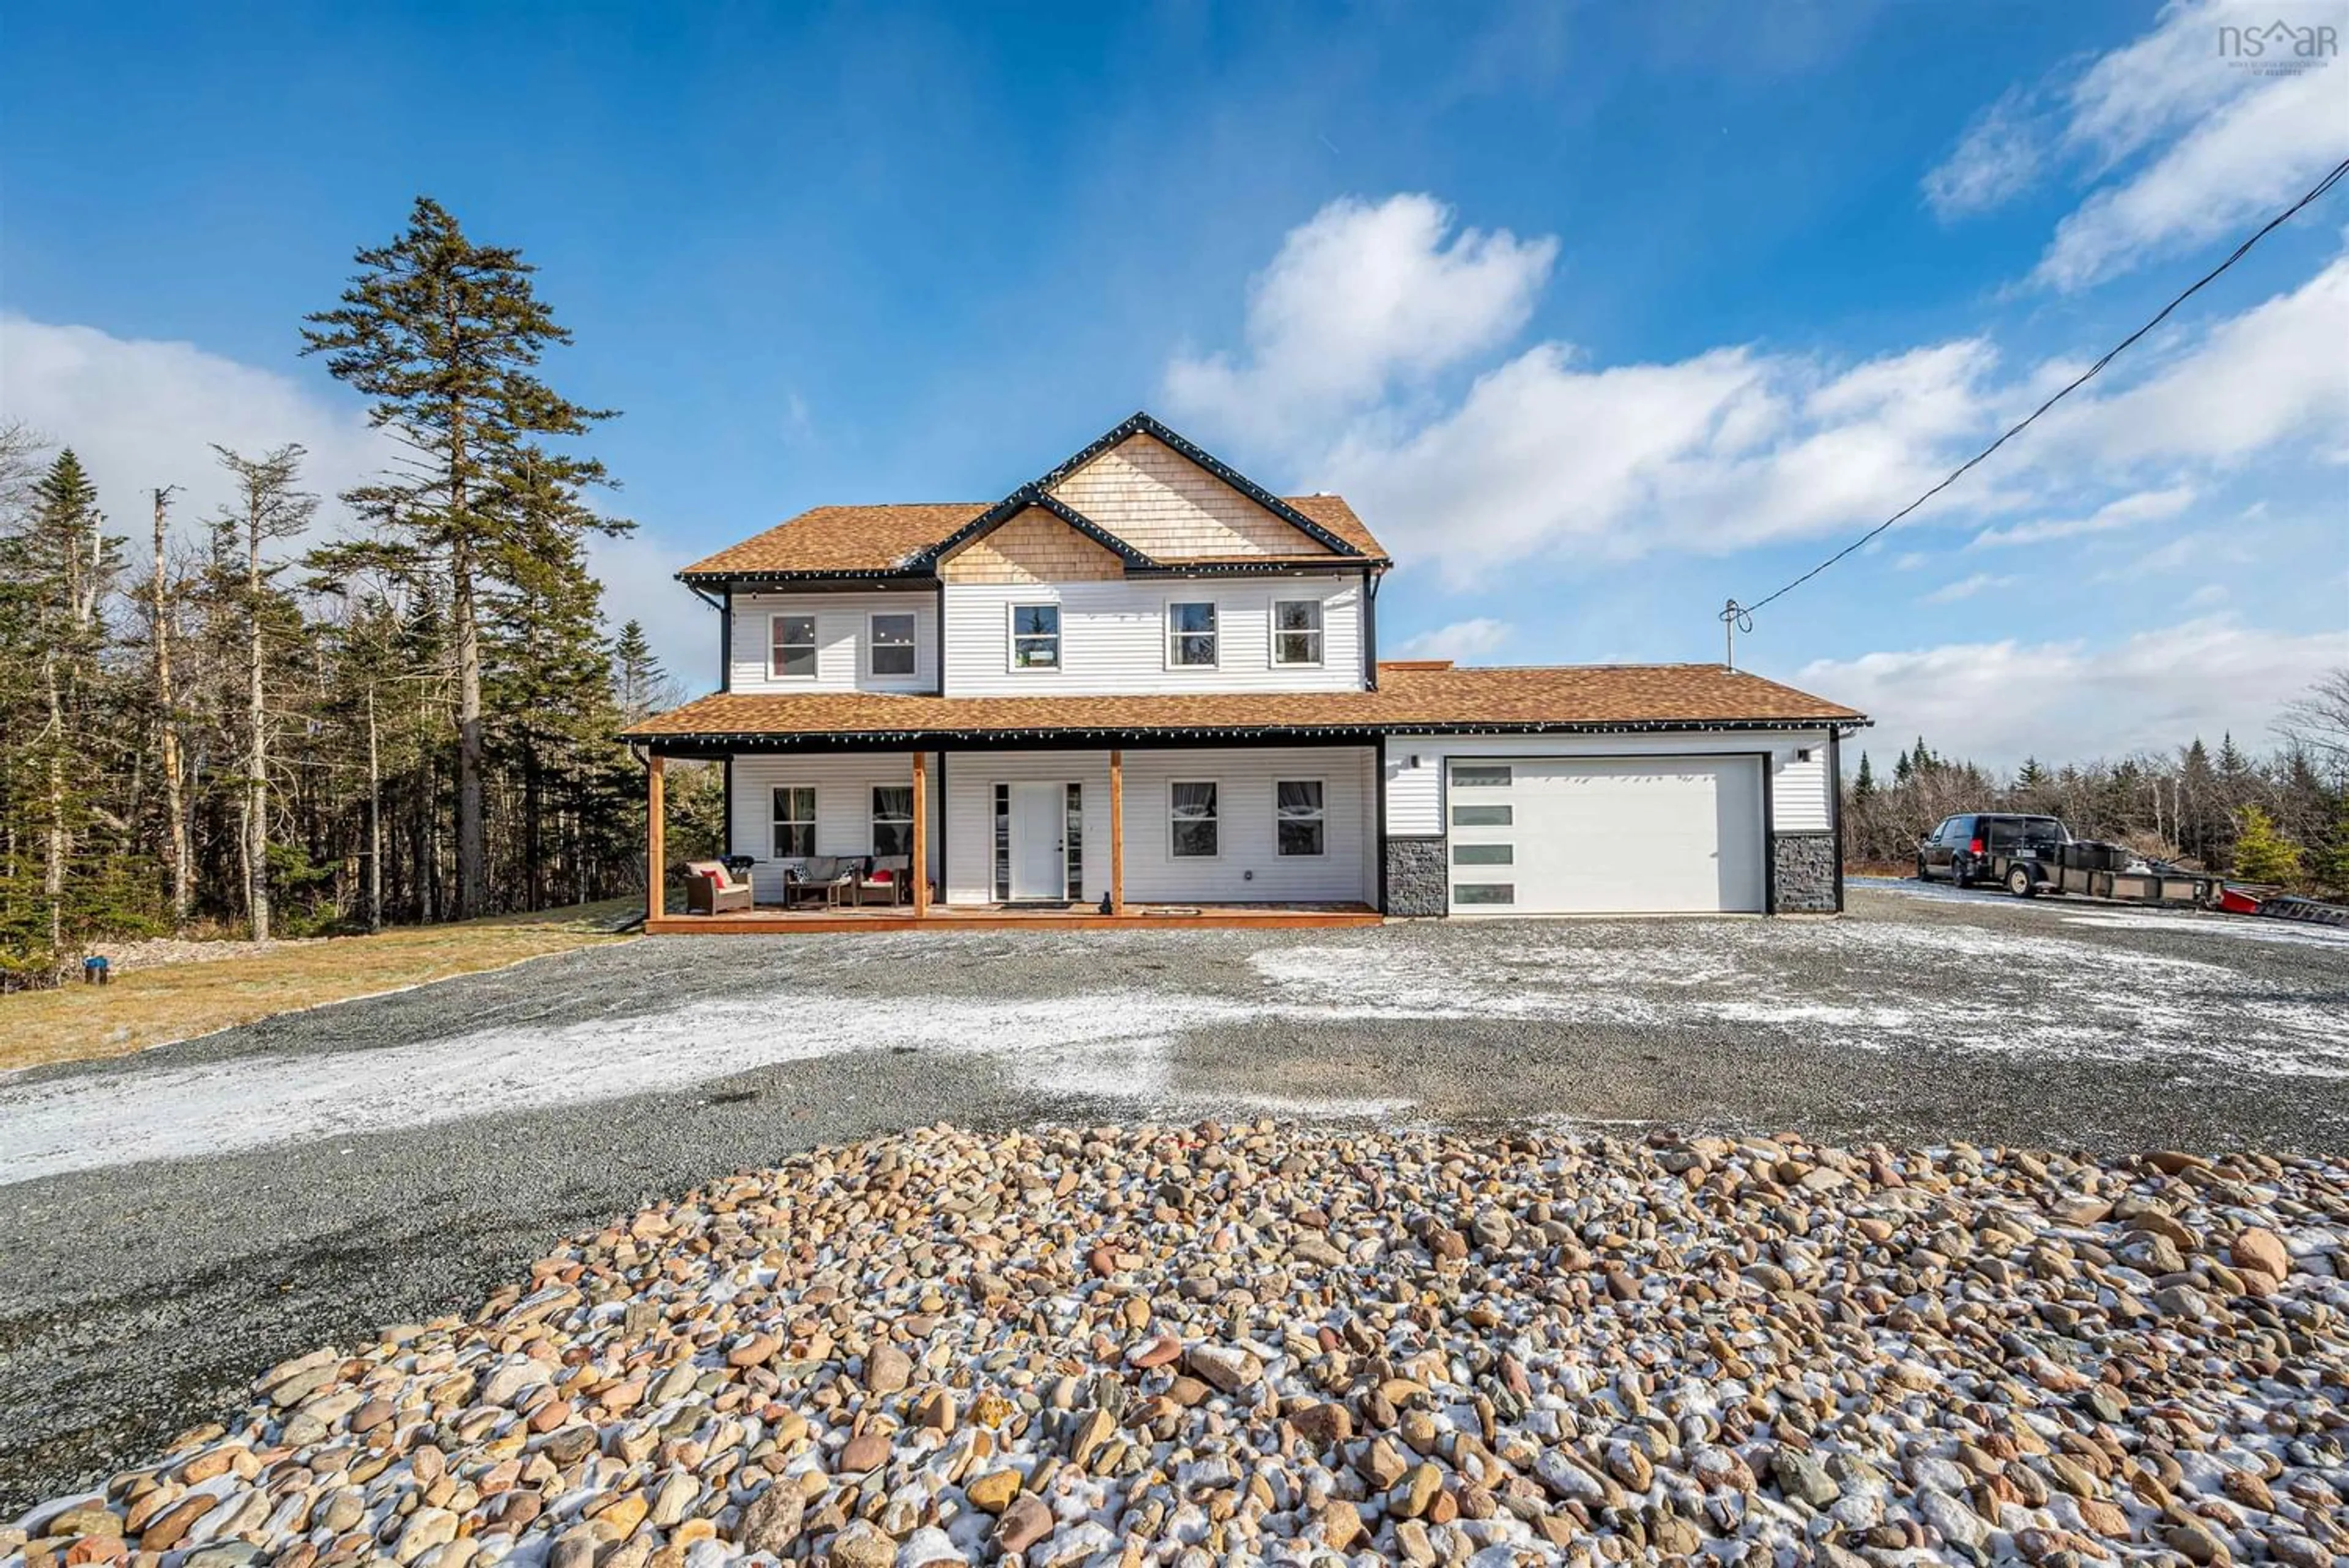 Home with stone exterior material for 3227 Beaver Bank Rd, Beaver Bank Nova Scotia B4G 2S6